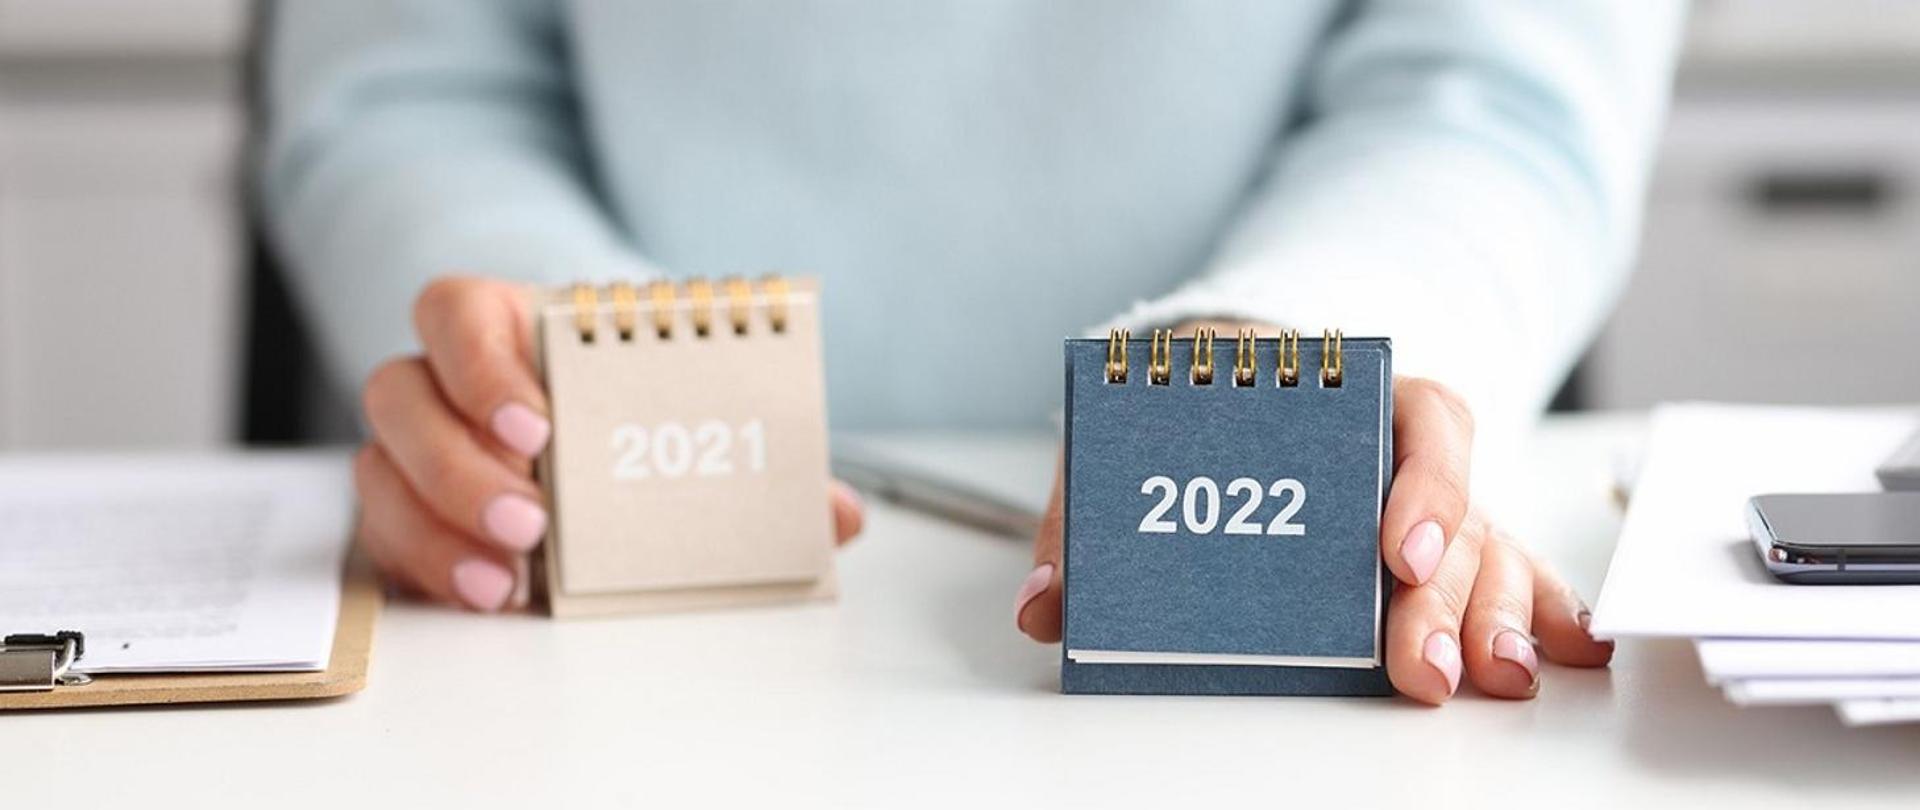 kalendarz z 2021 i kalendarz z 2022 roku. 